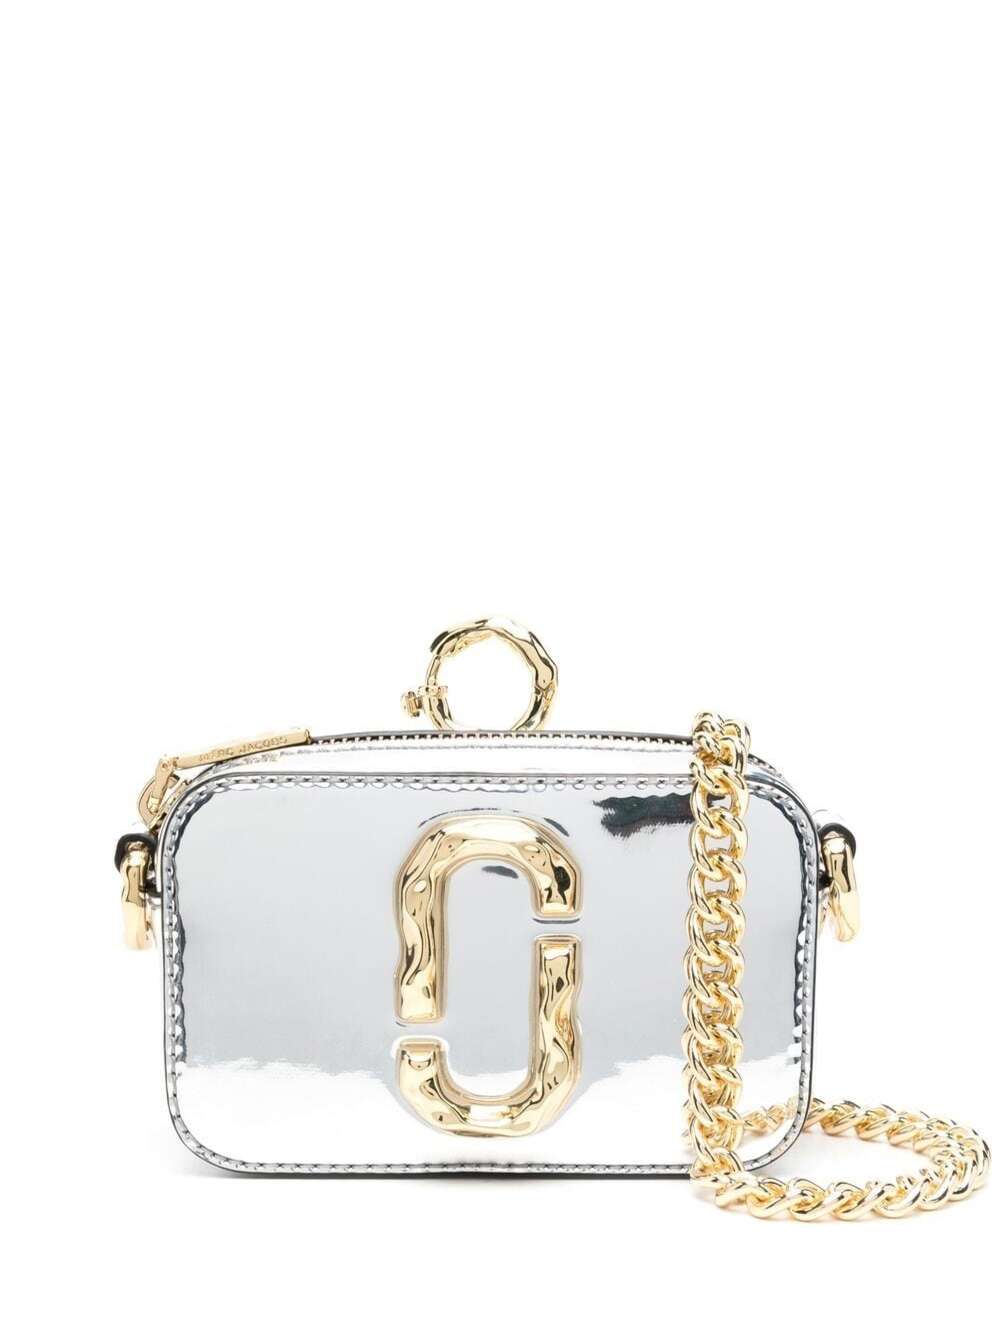 Marc Jacobs Snapshot Specchio Mini Leather Cross Body Bag in White